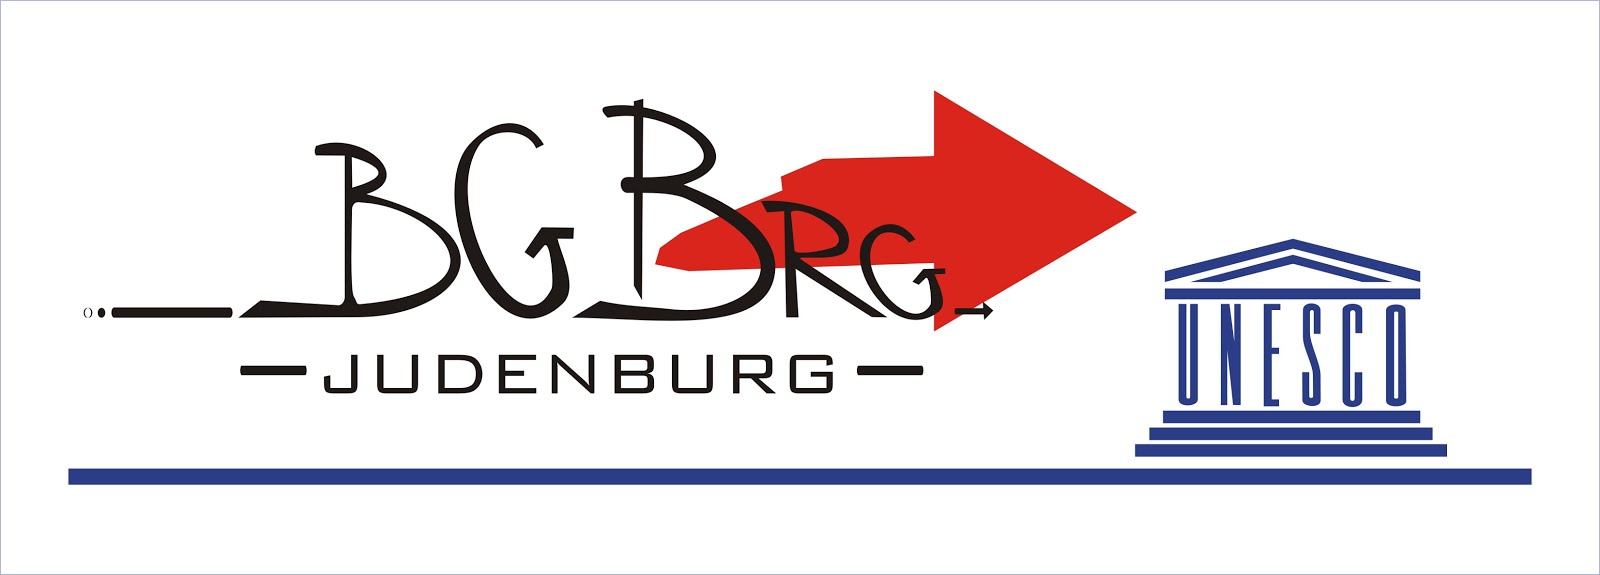 BG/BRG Judenburg